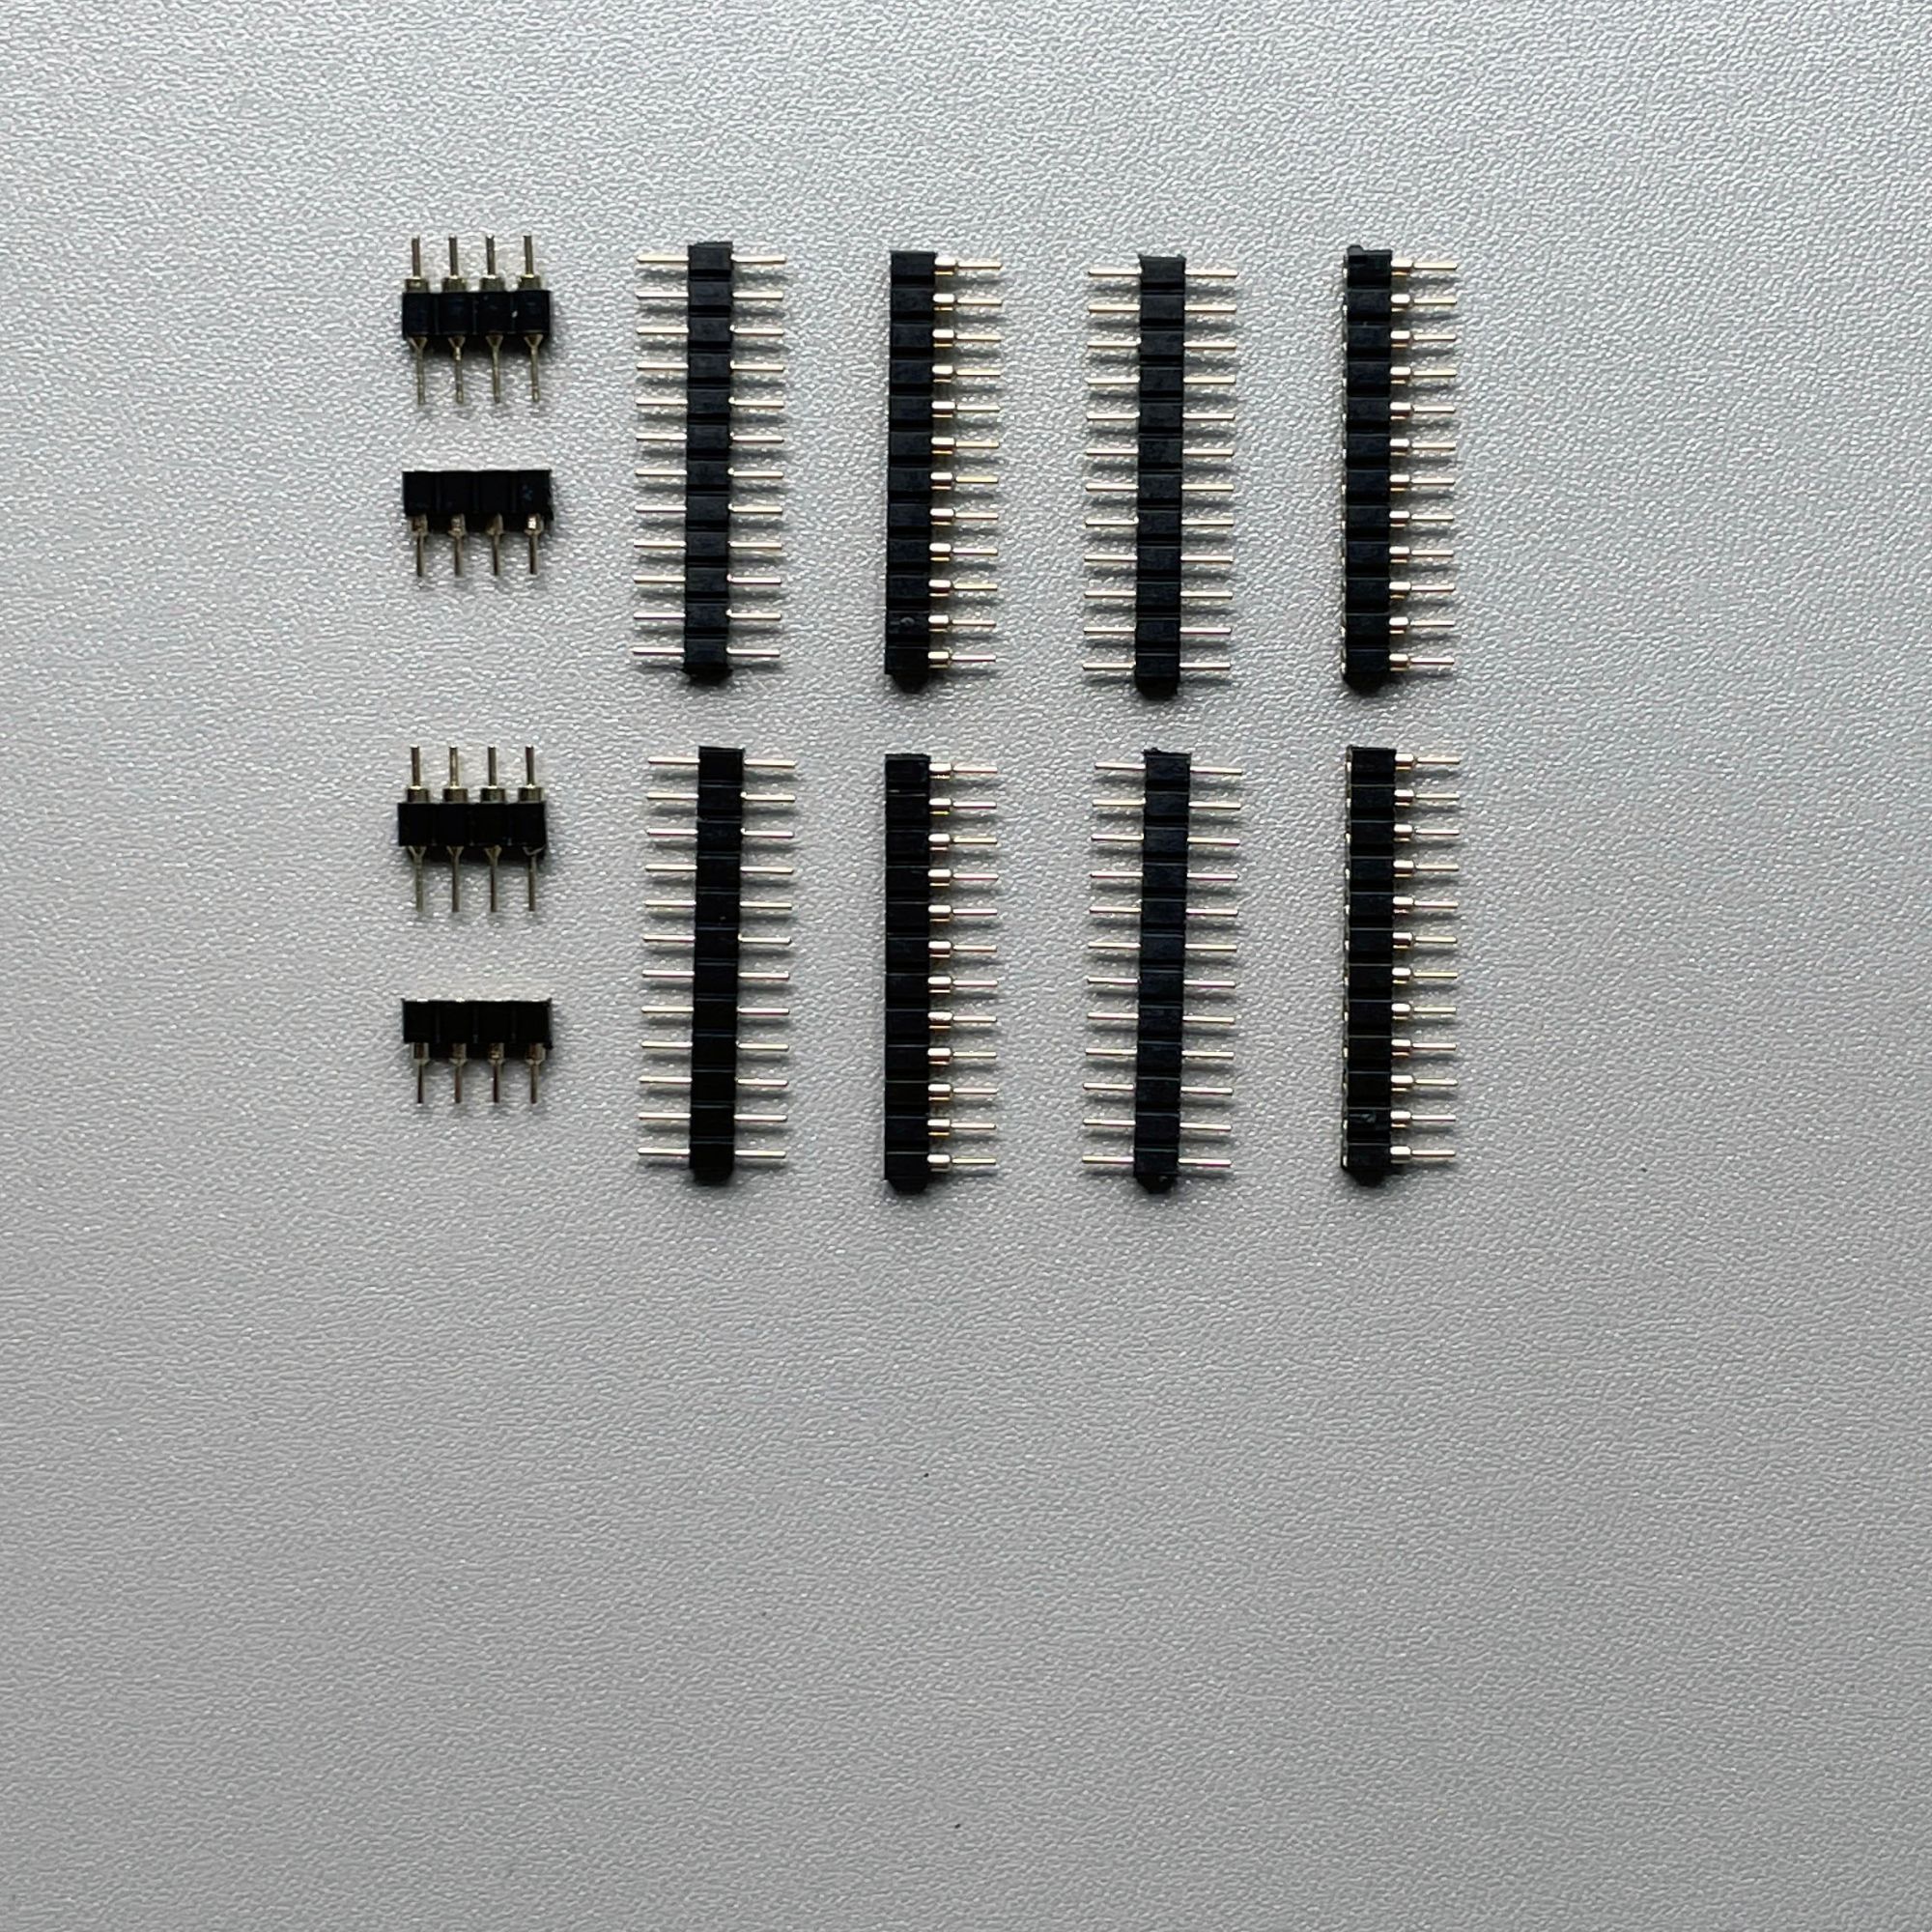 MCU Controller sockets and Display sockets for Split keyboard